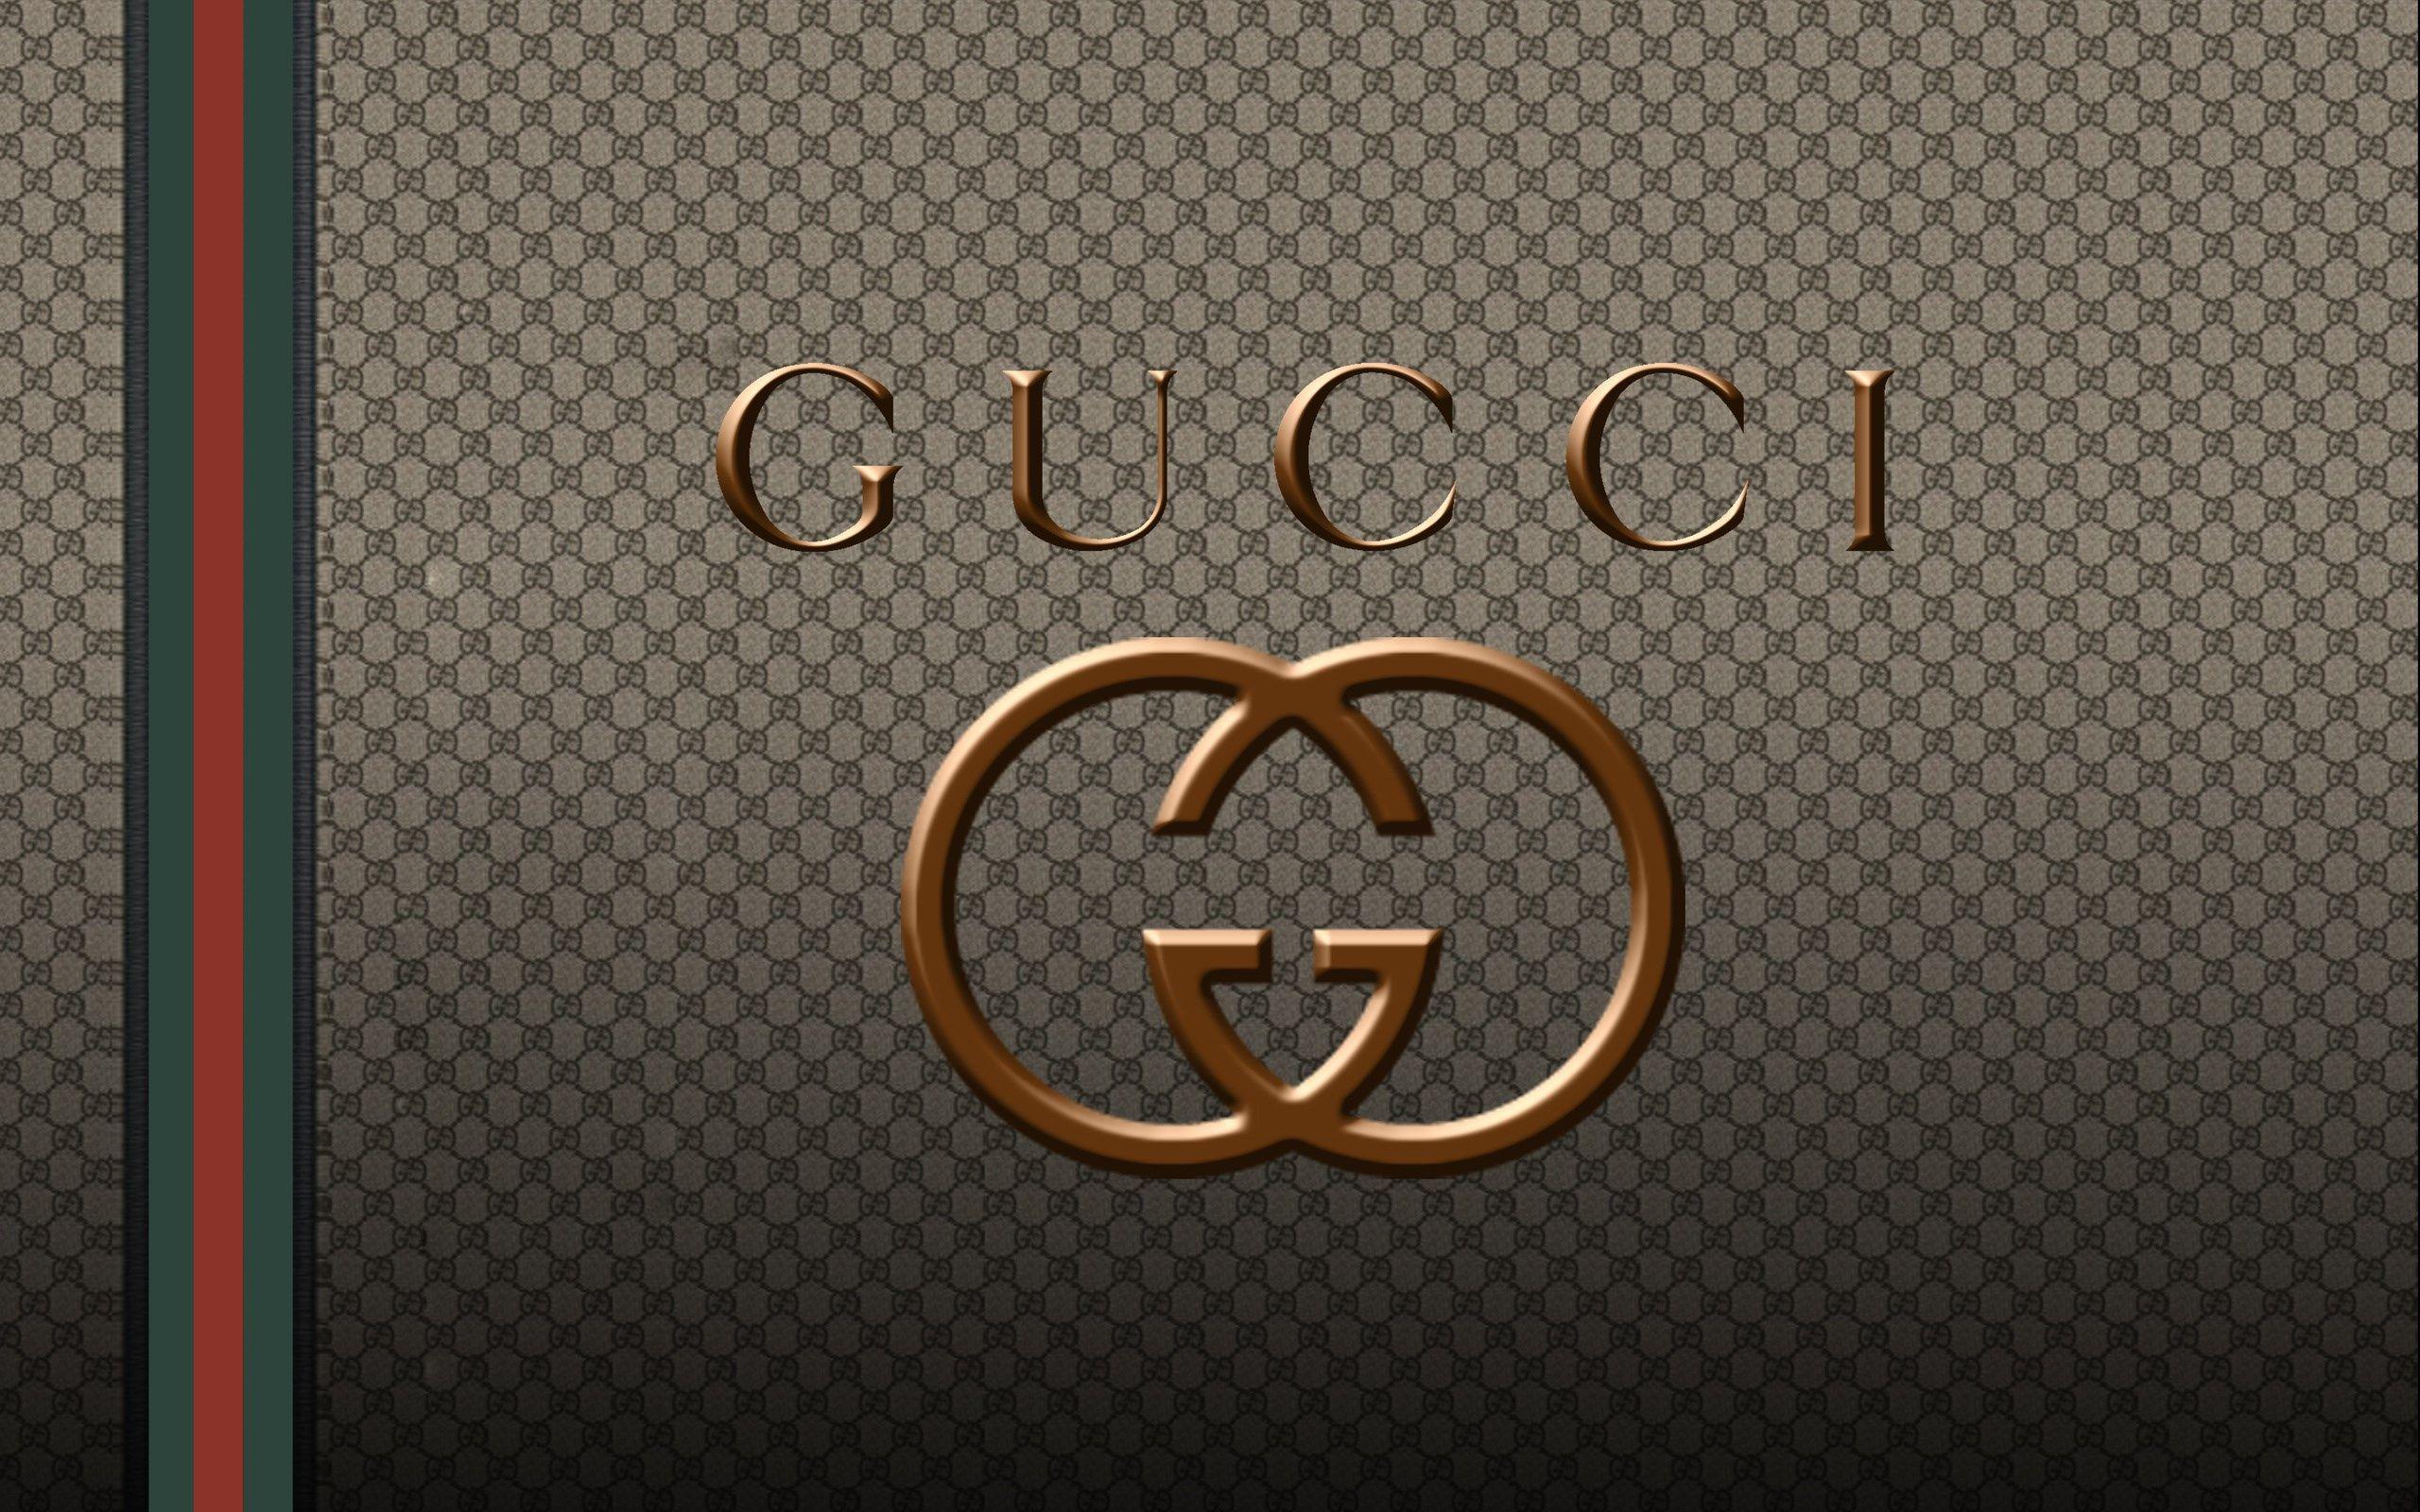 Gucci Ipad Wallpapers - Top Free Gucci 